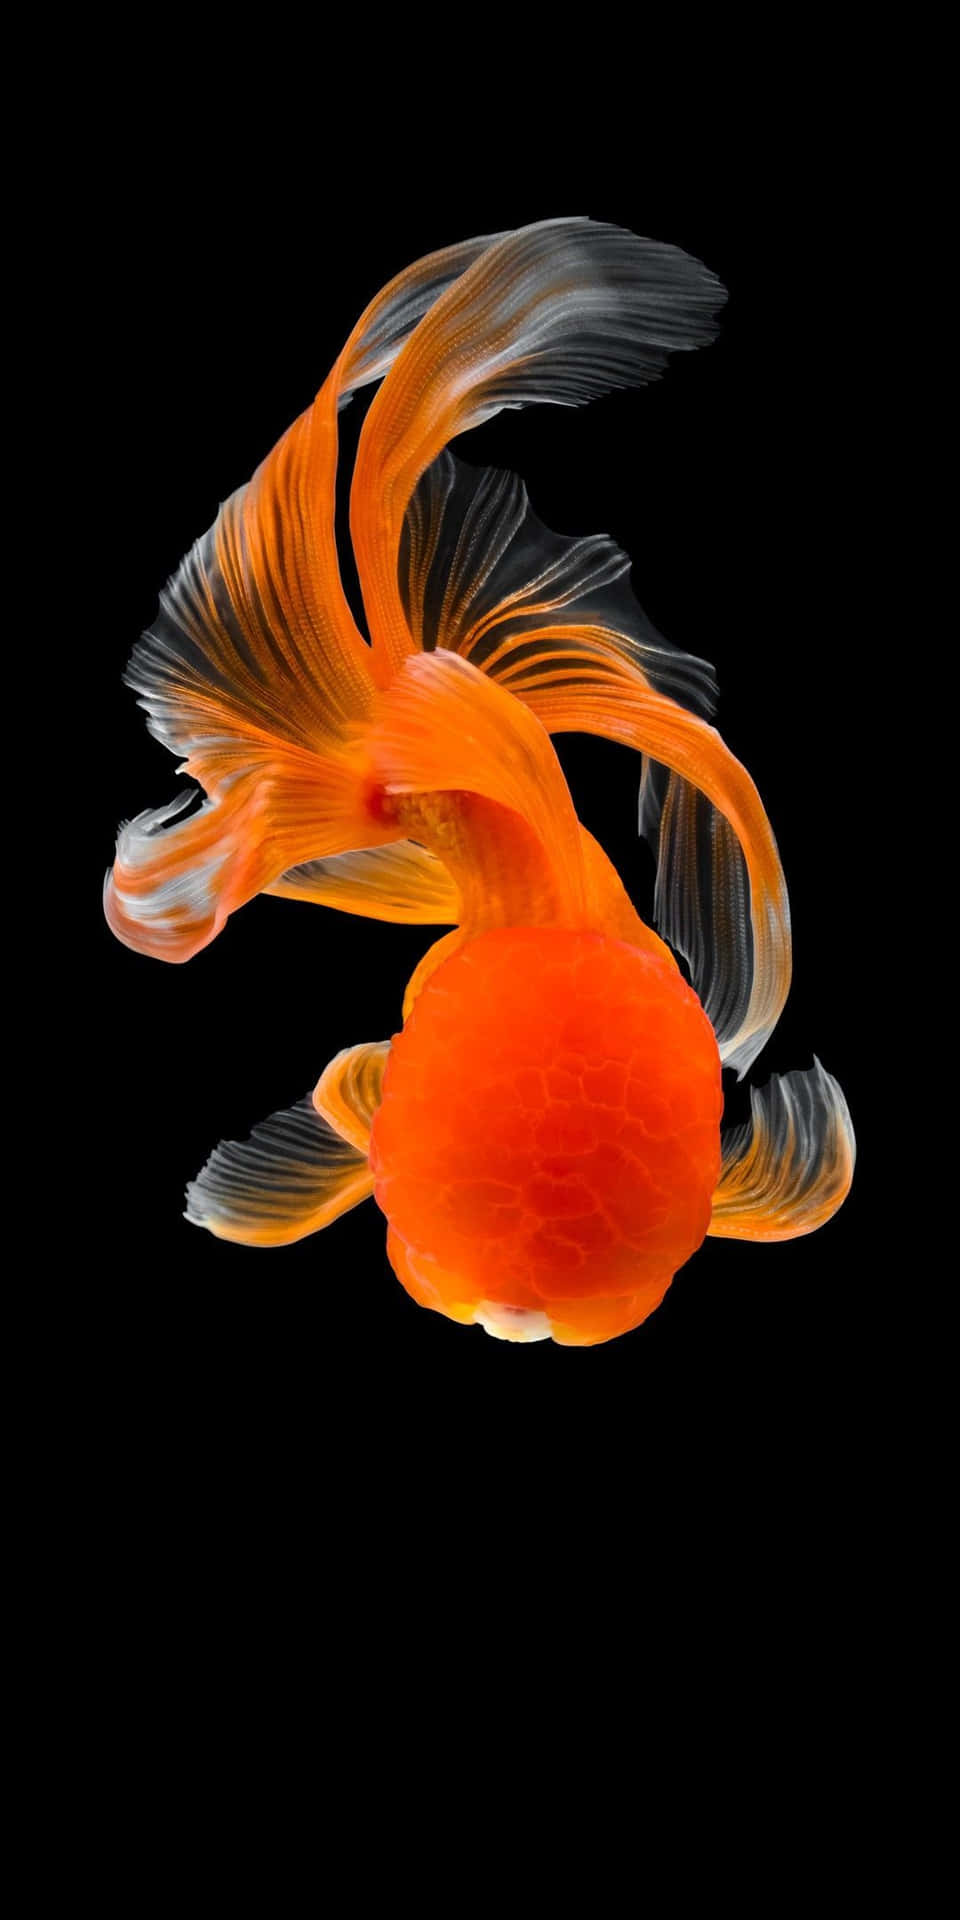 A Fish Swimming in an Aquatic Aquarium, Captured with Pixel 3